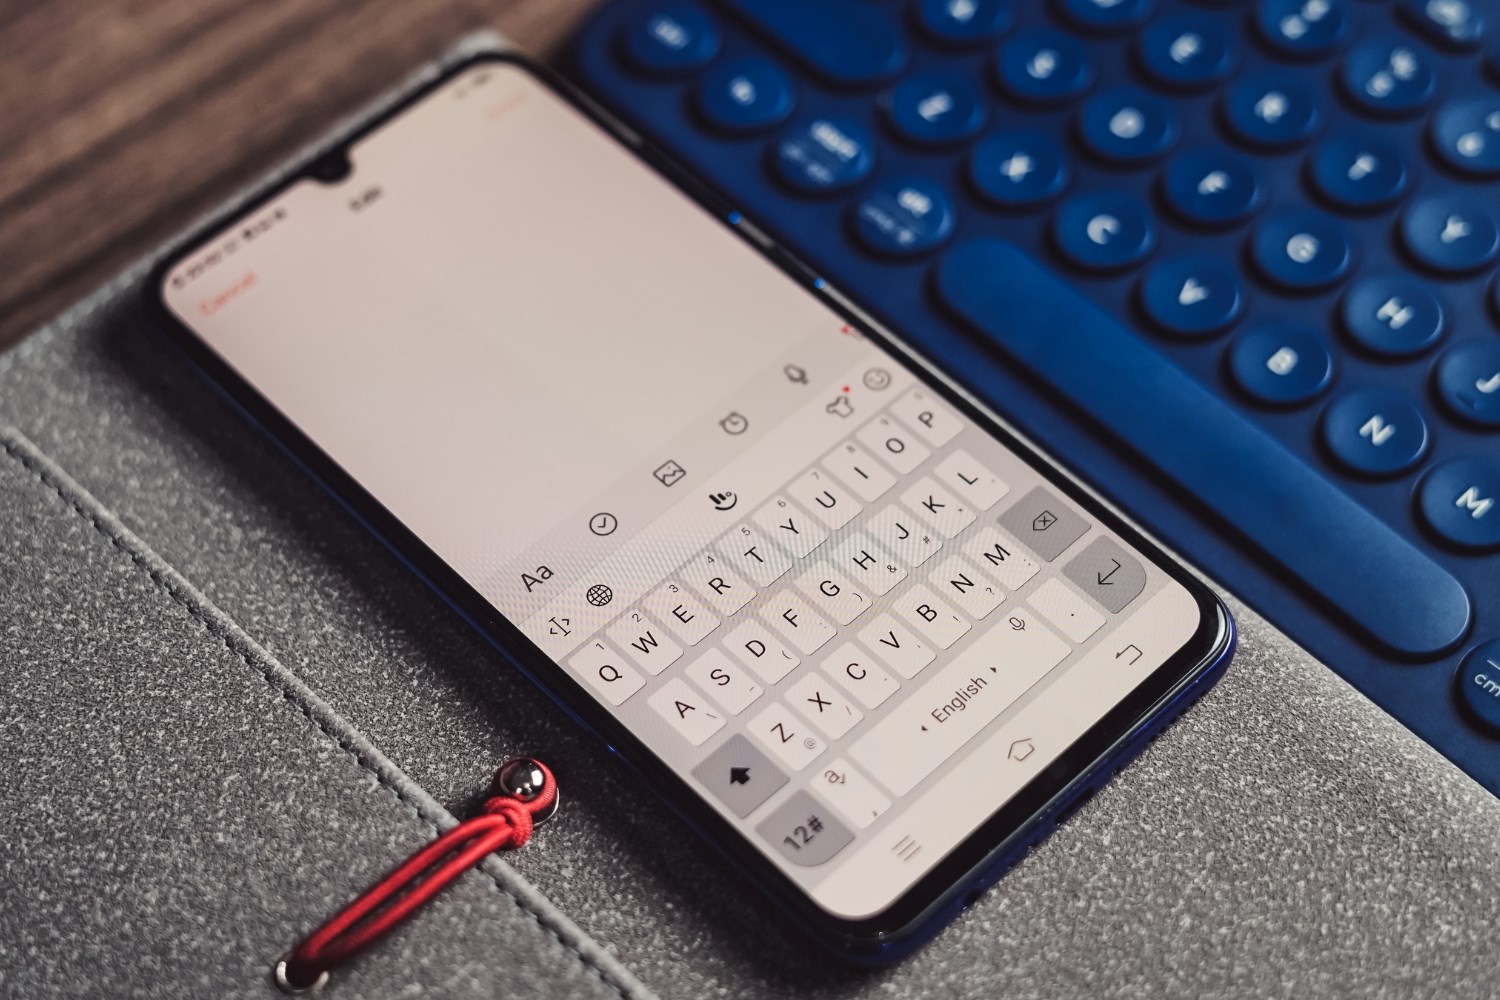 Xiaomi Phone Keyboard Language Change: Step-by-Step Guide